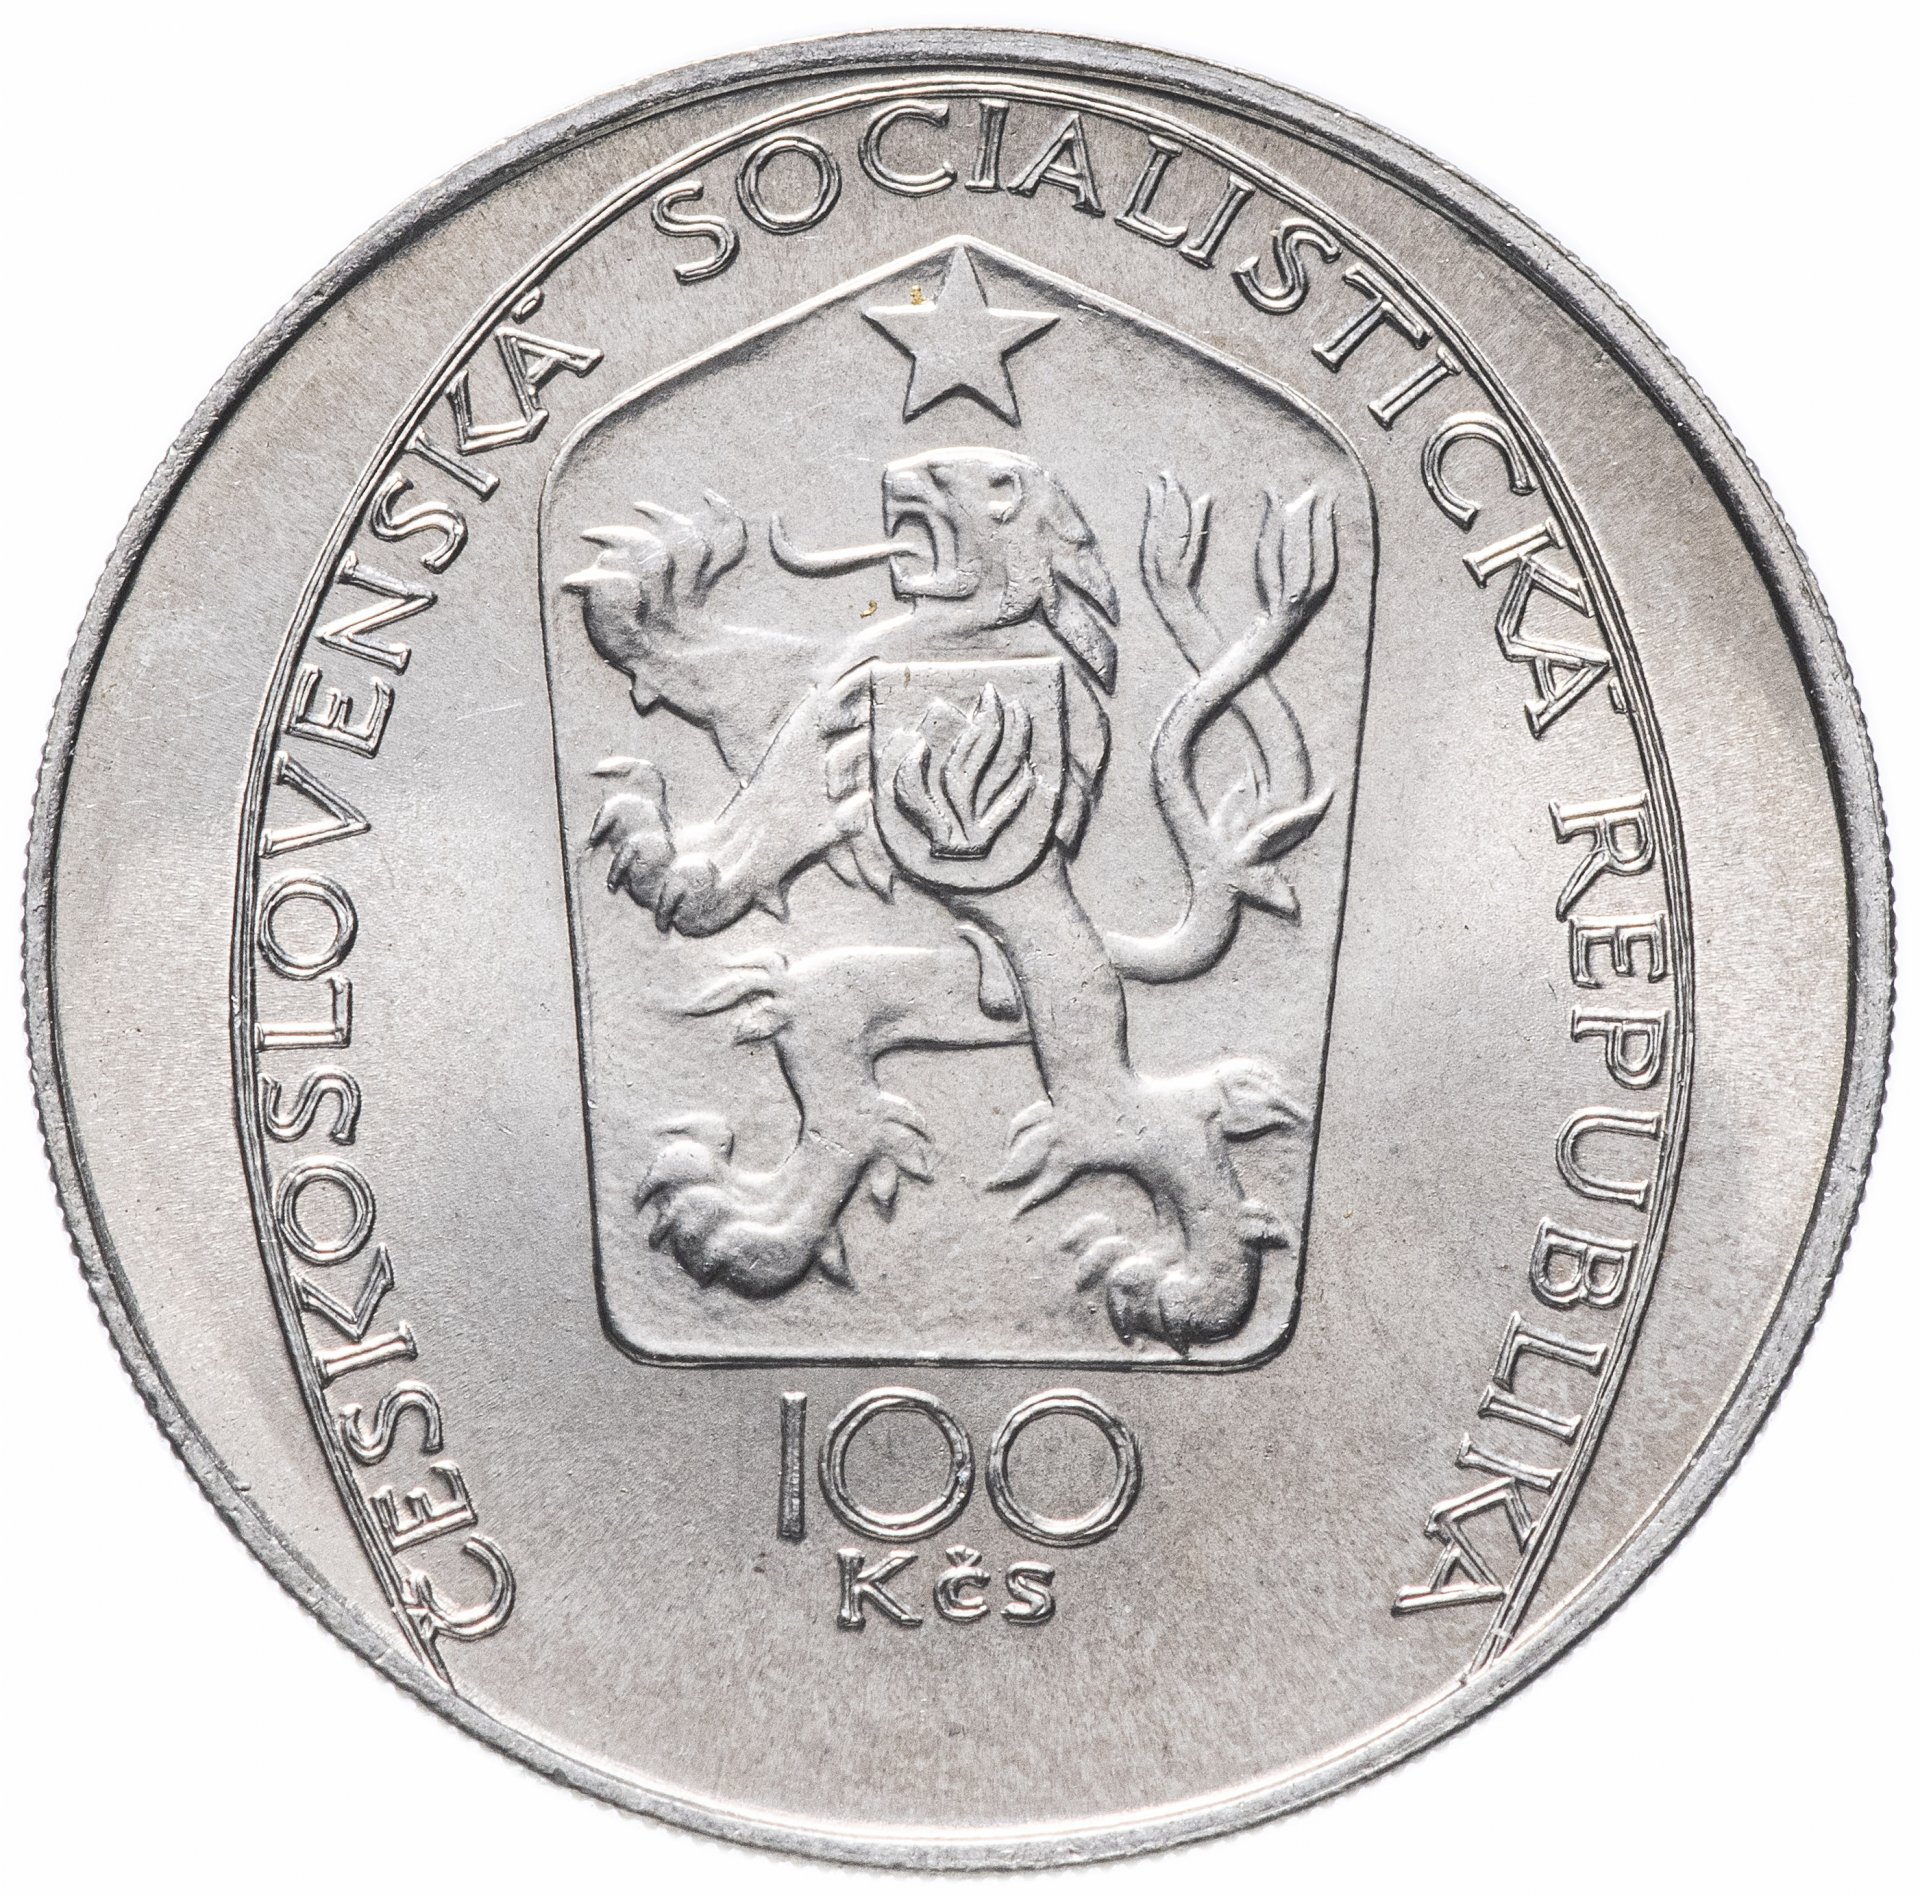 100 крон чехословакия. Чехословакия 1 крона 1985. Монеты Чехословакии. Юбилейные монеты Чехословакии. Монета 10 крон 1985.